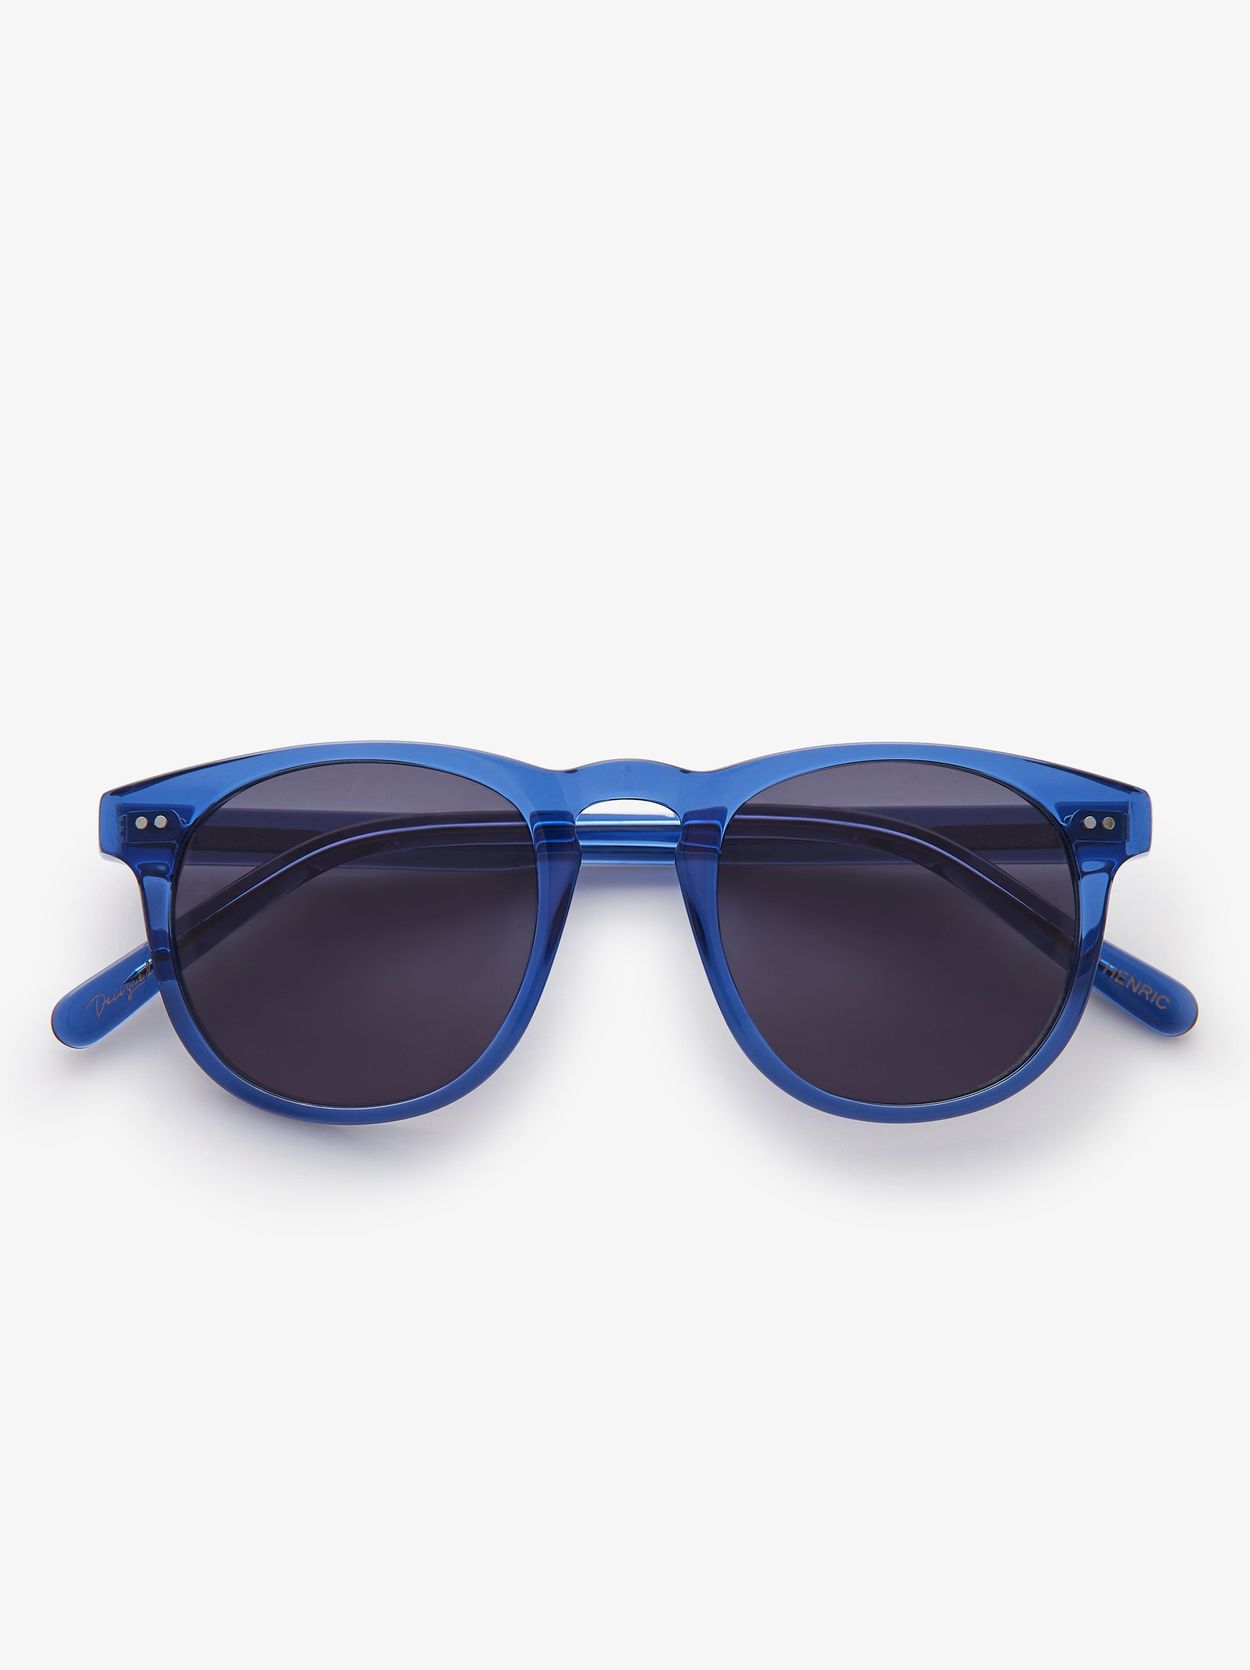 Blue Sunglasses Los Angeles